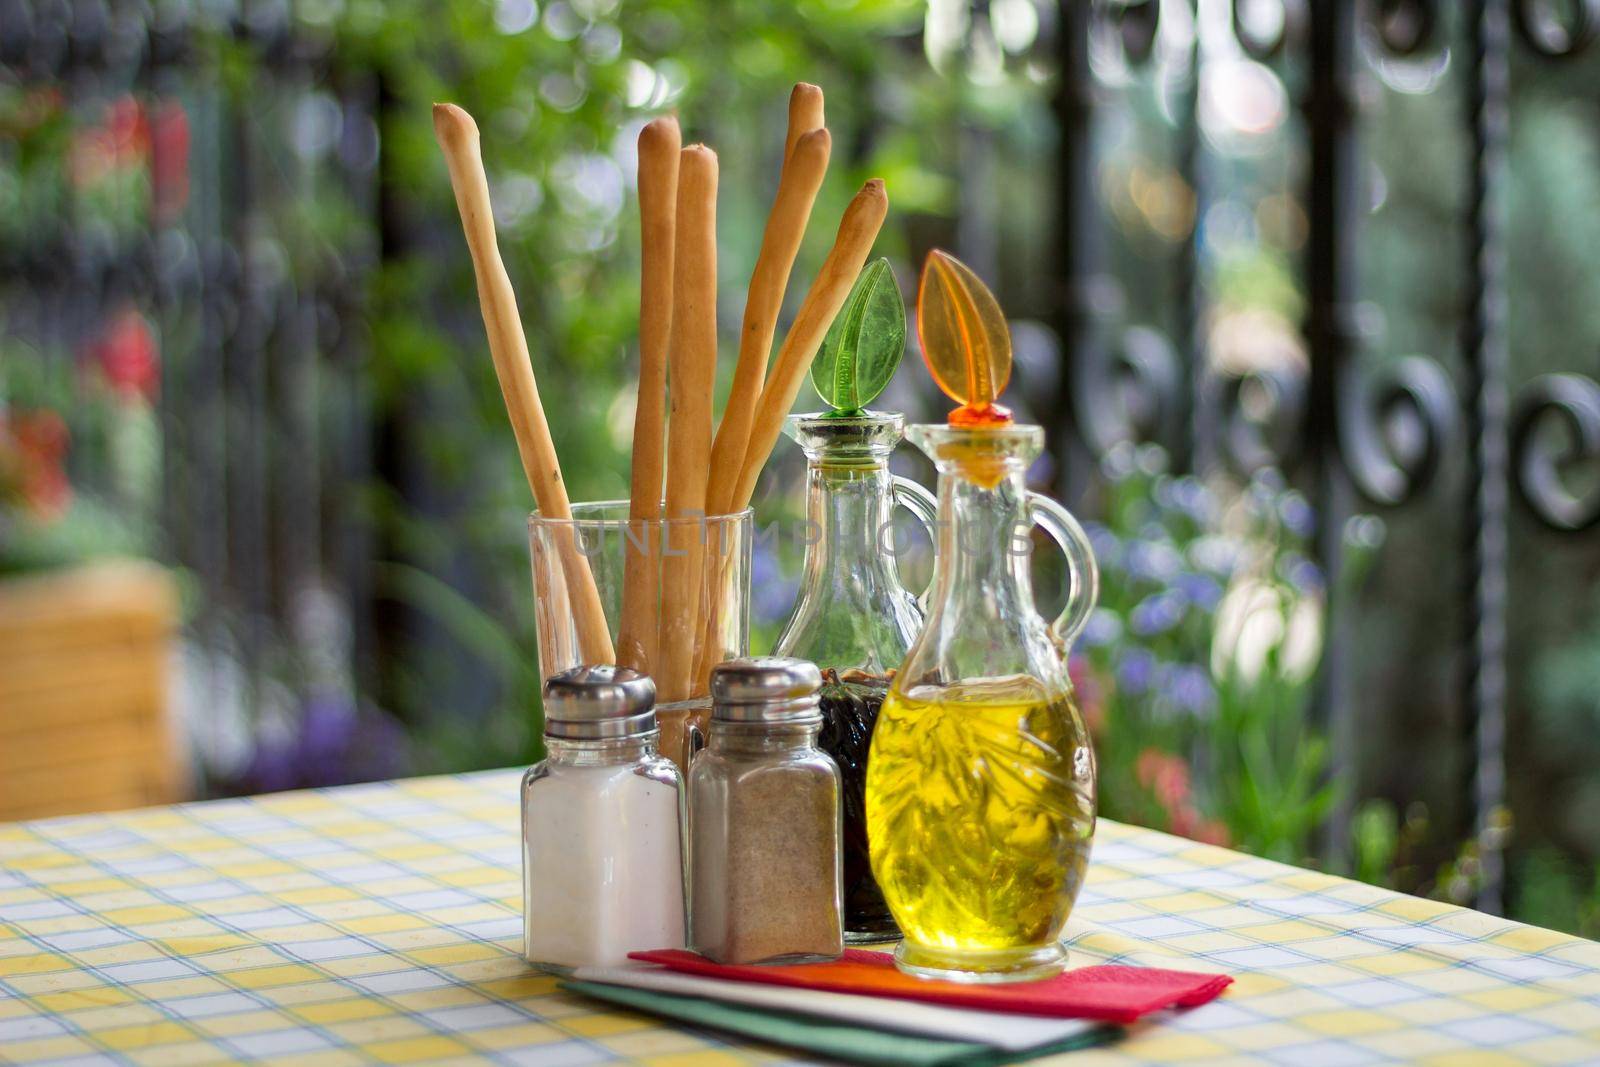 Italian serving. Table set of olive oil, bread sticks, salt and pepper by VeraVerano